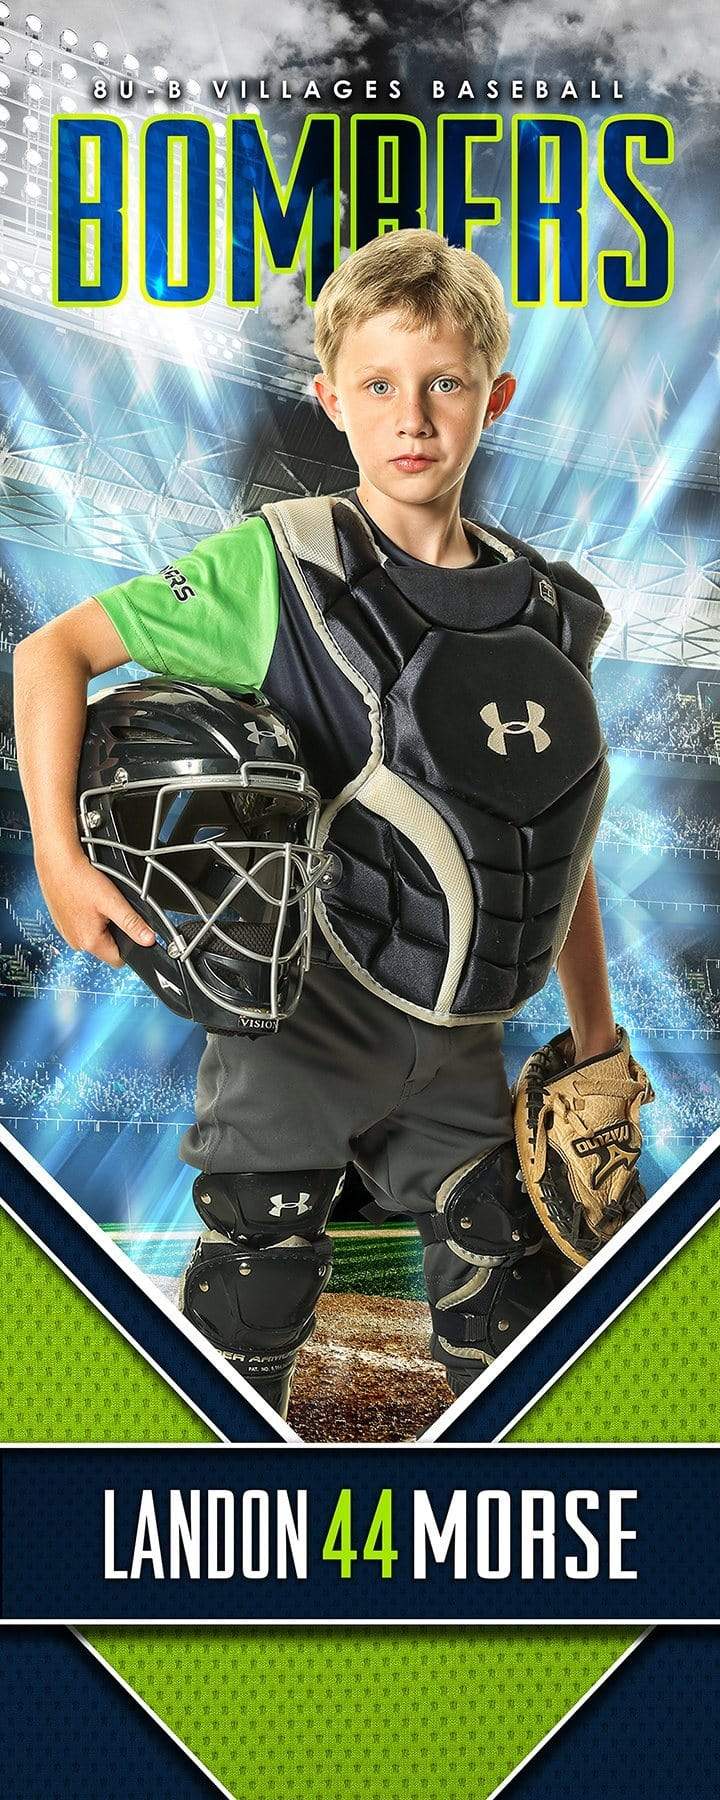 X Factor Baseball / Softball - Cinema Series - Player Wall/Locker Banner & Poster Template-Photoshop Template - PSMGraphix